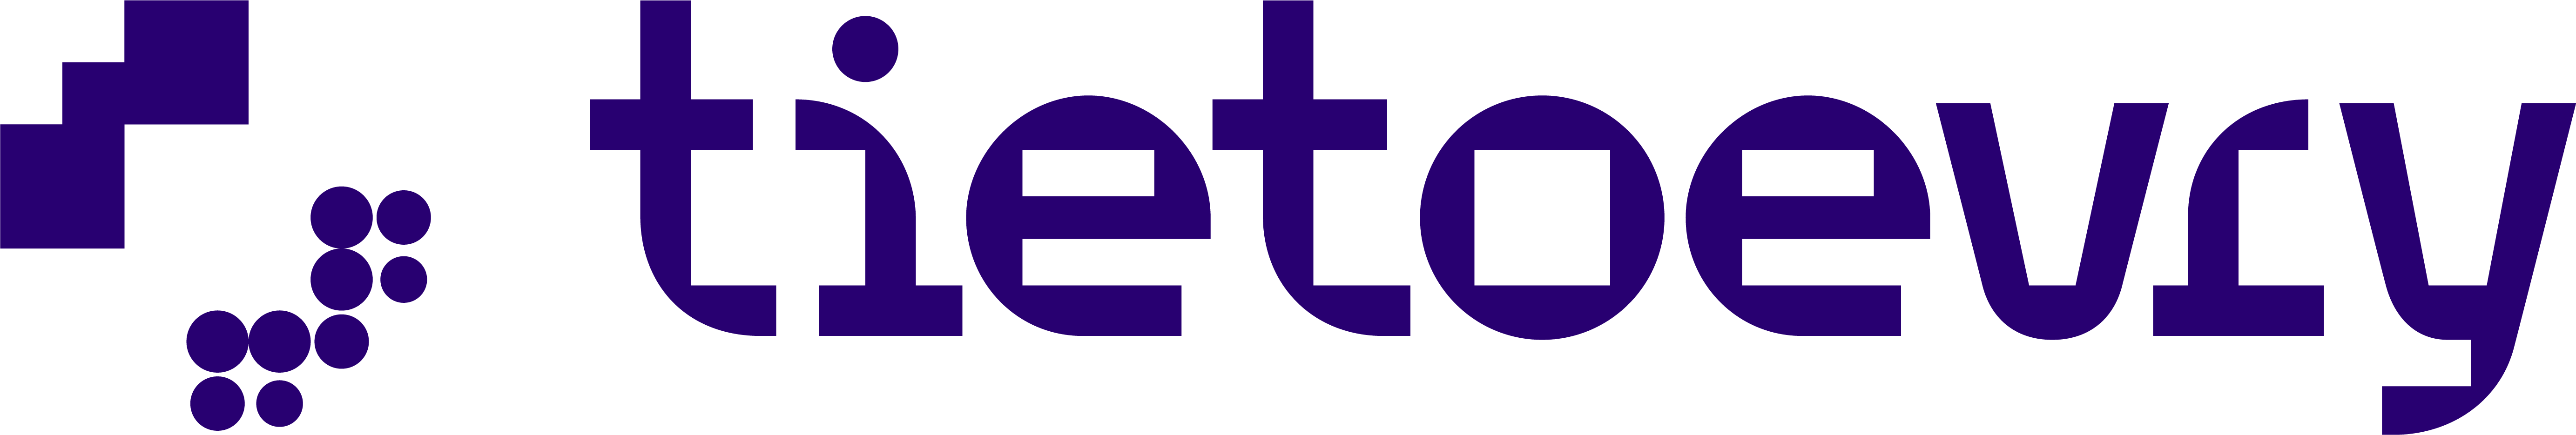 tietoevry-logo-digital.png